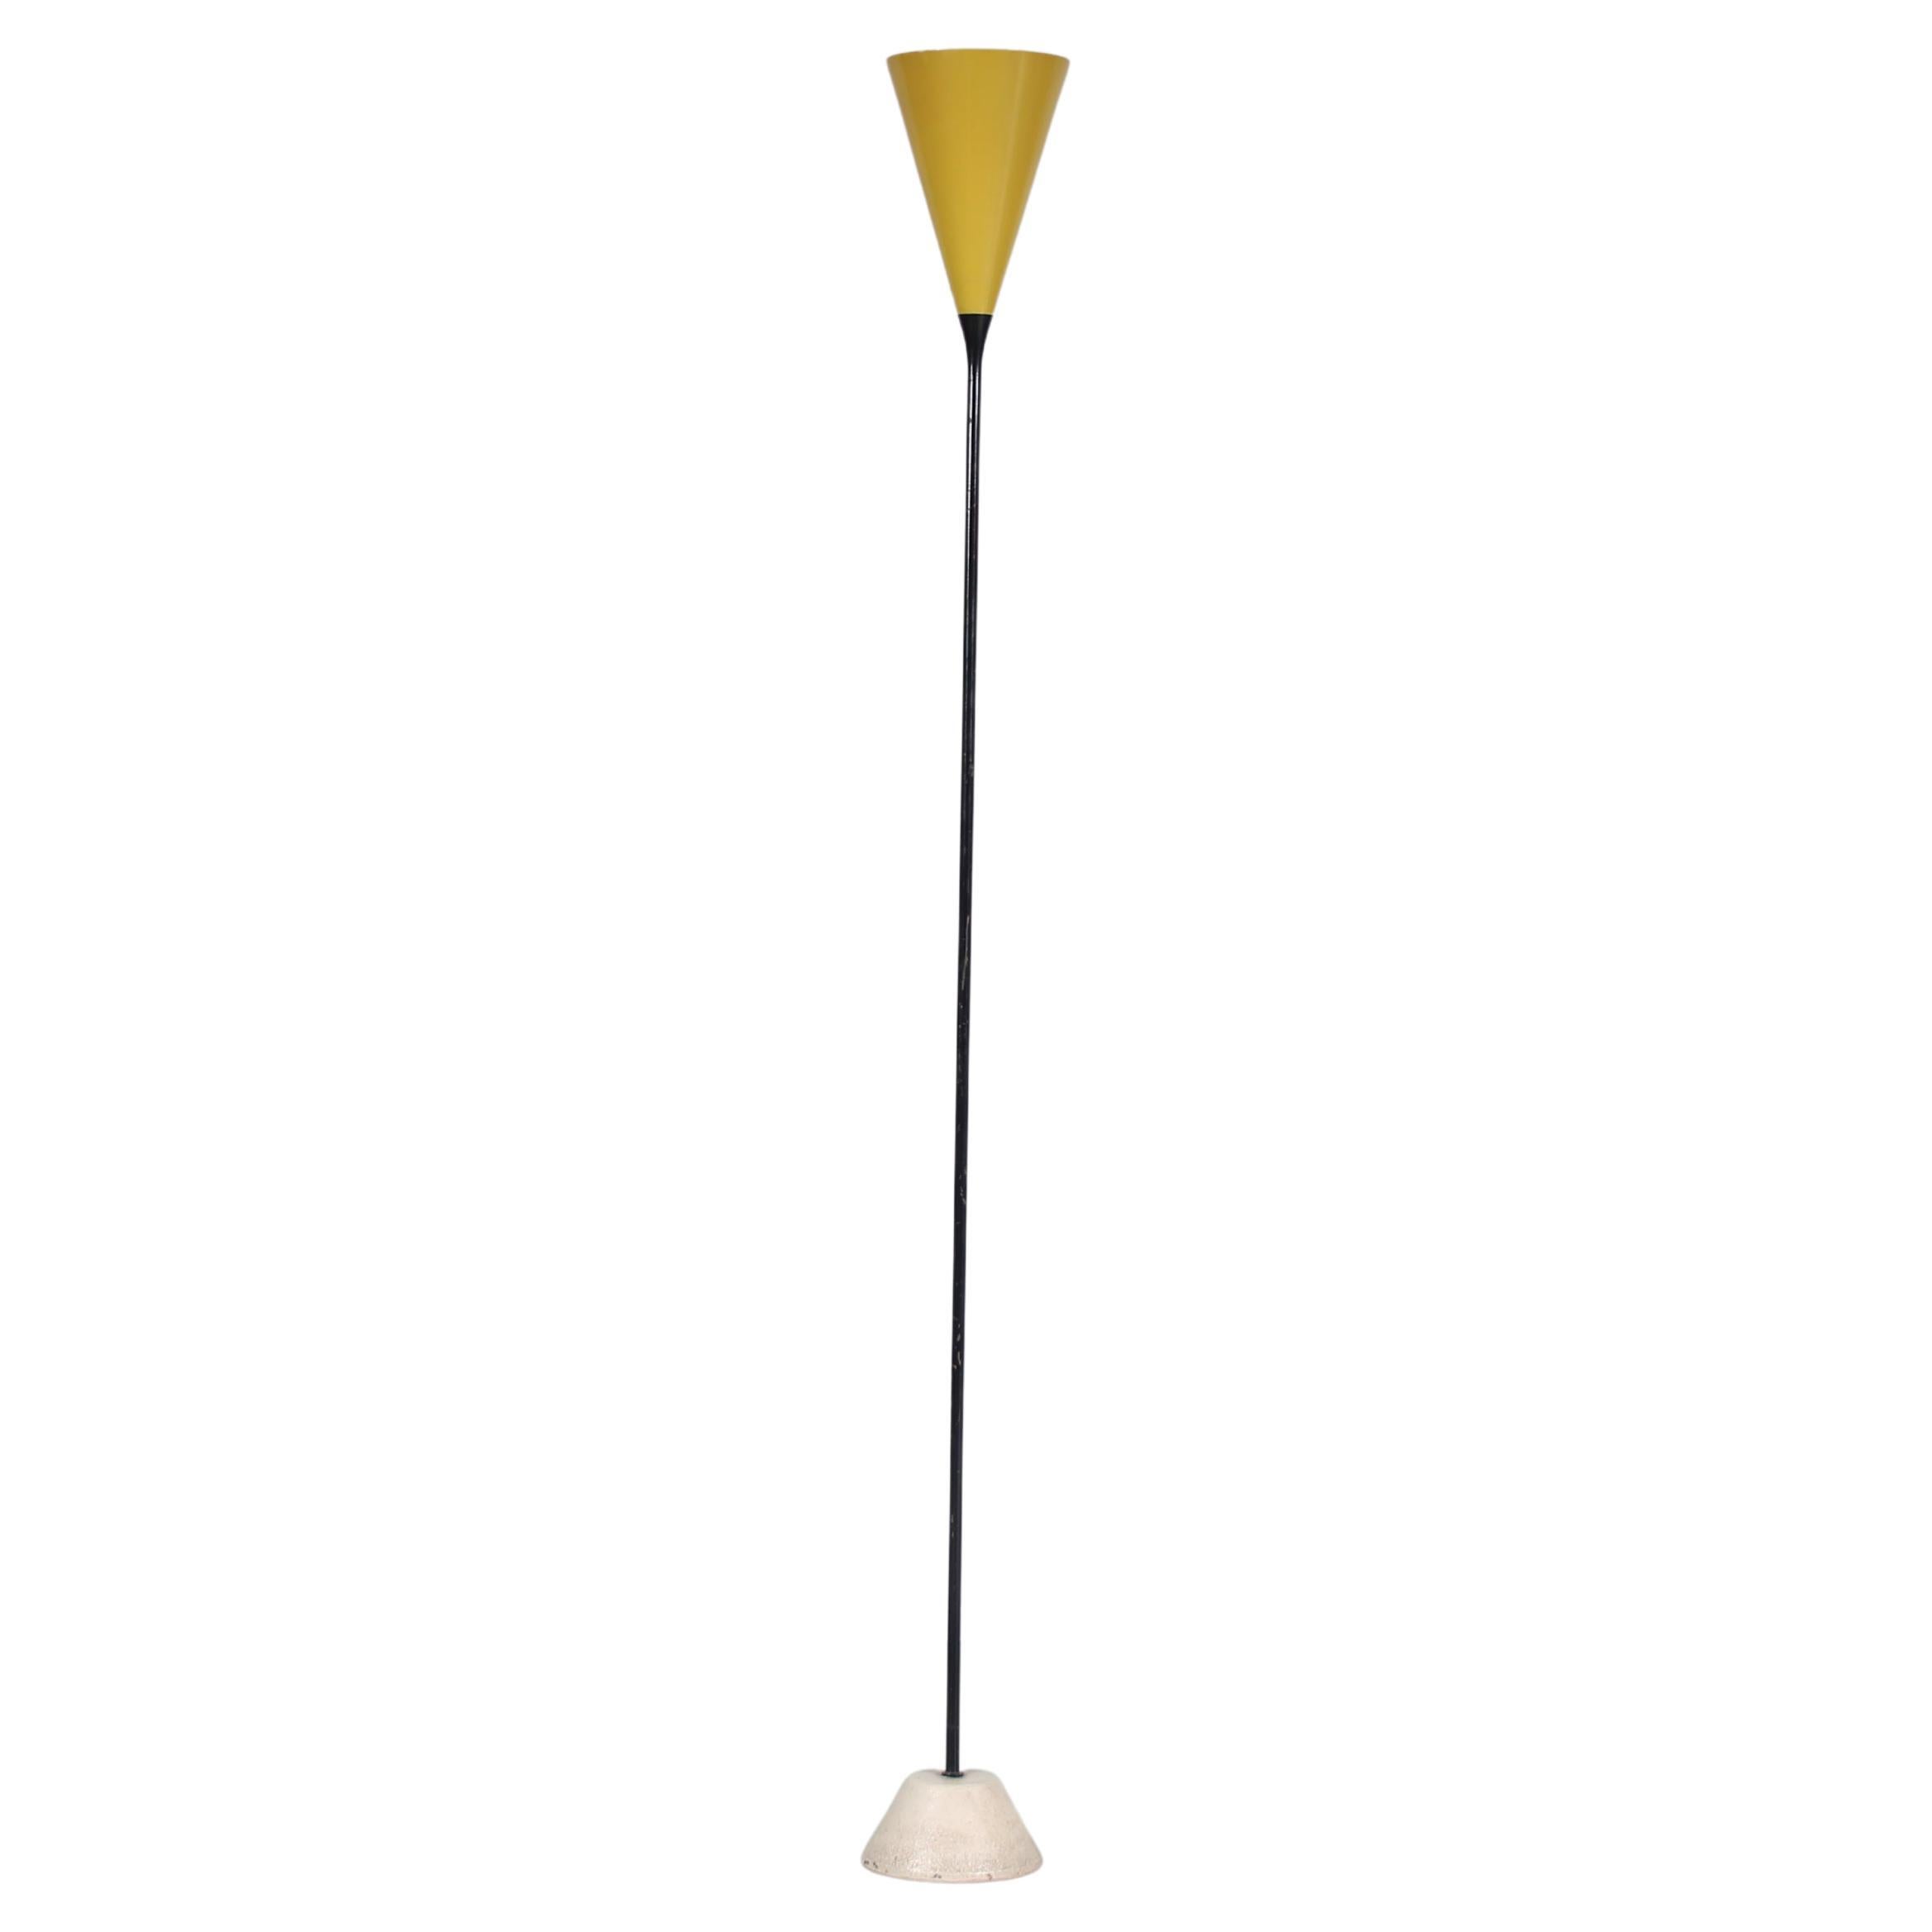 Gino Sarfatti Floor Lamp for Arteluce, Italy 1950 For Sale